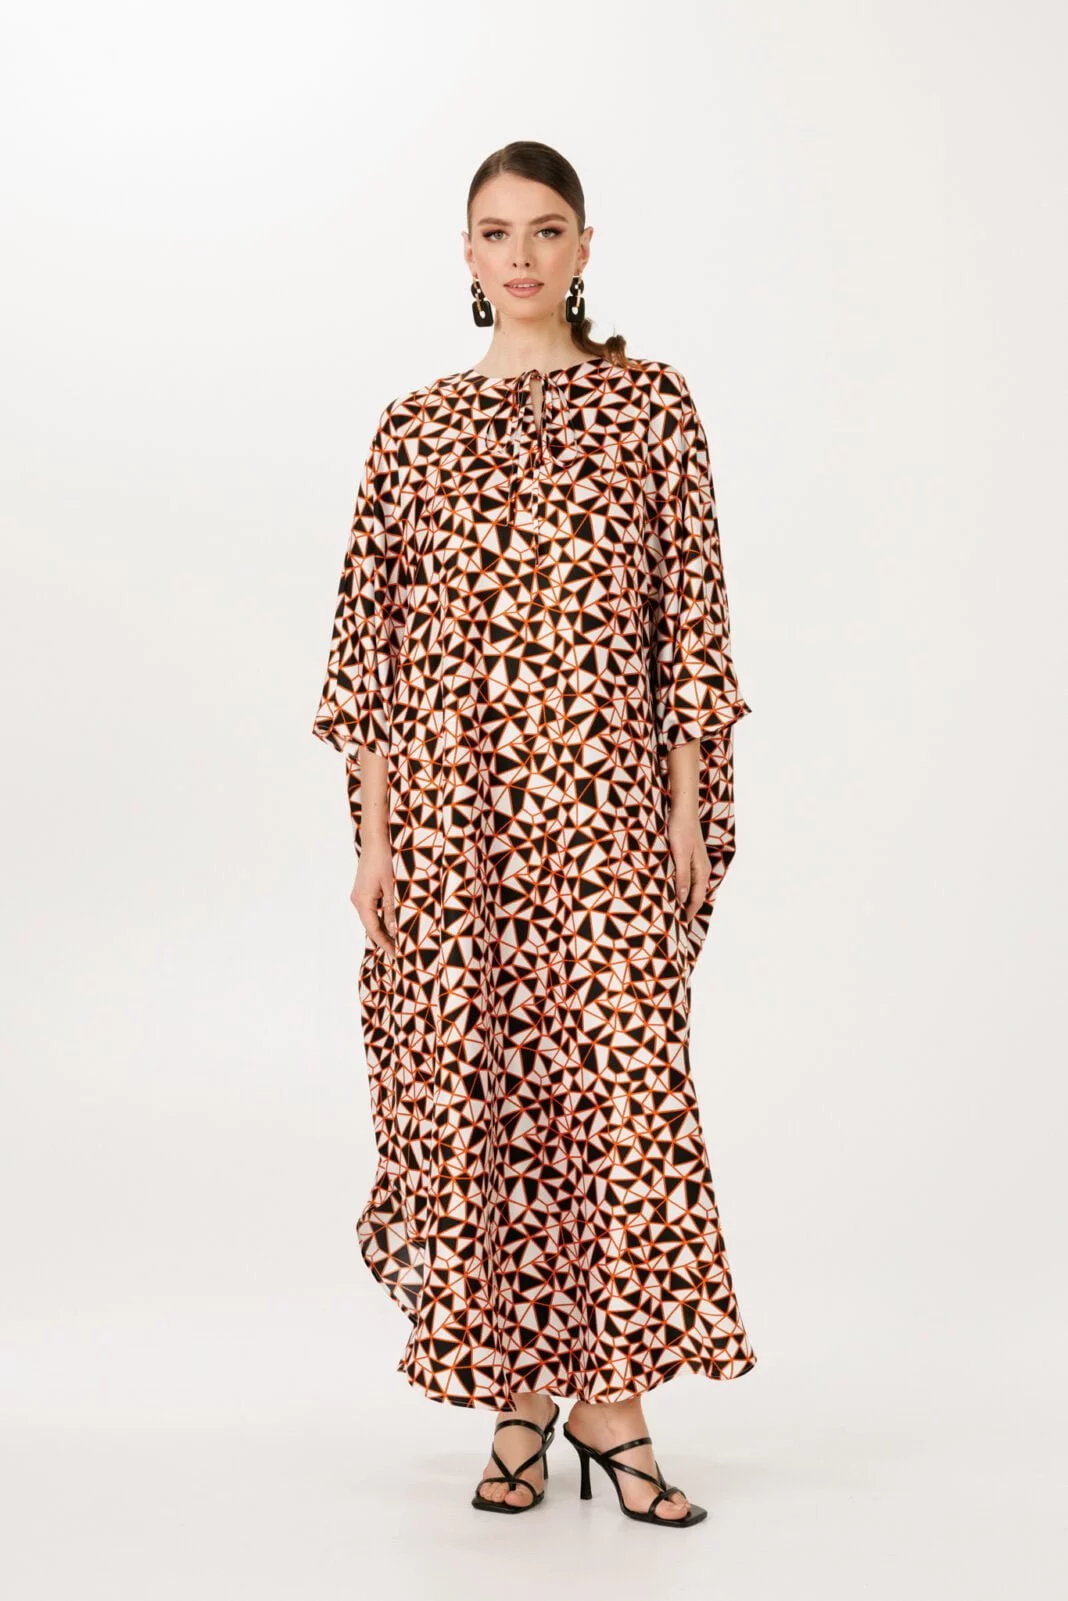 Geometric print in brown tones maxi kaftan dress loose fit by House of Azoiia